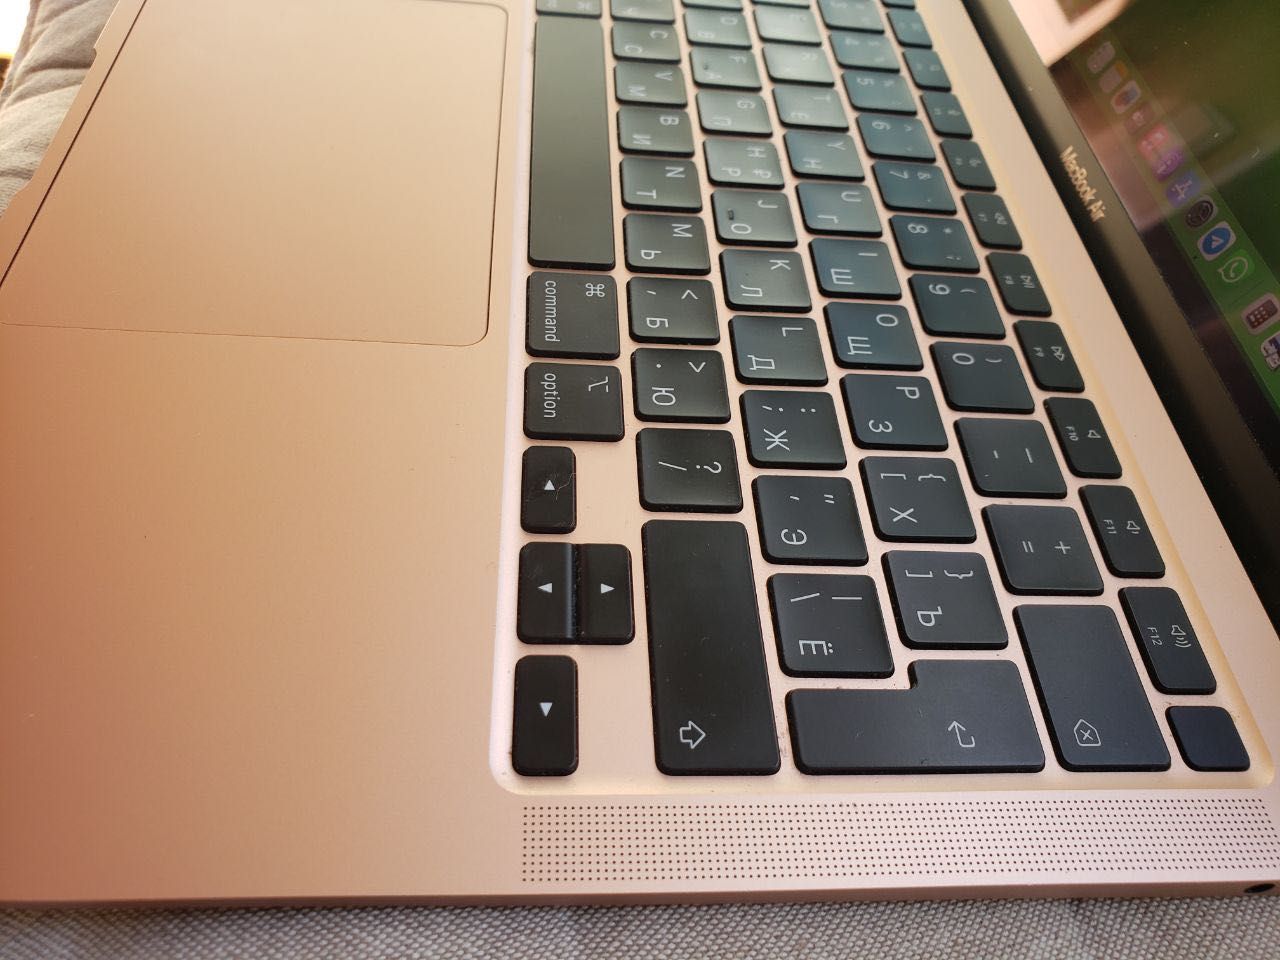 MacBook Air m1 Gold 8/2020